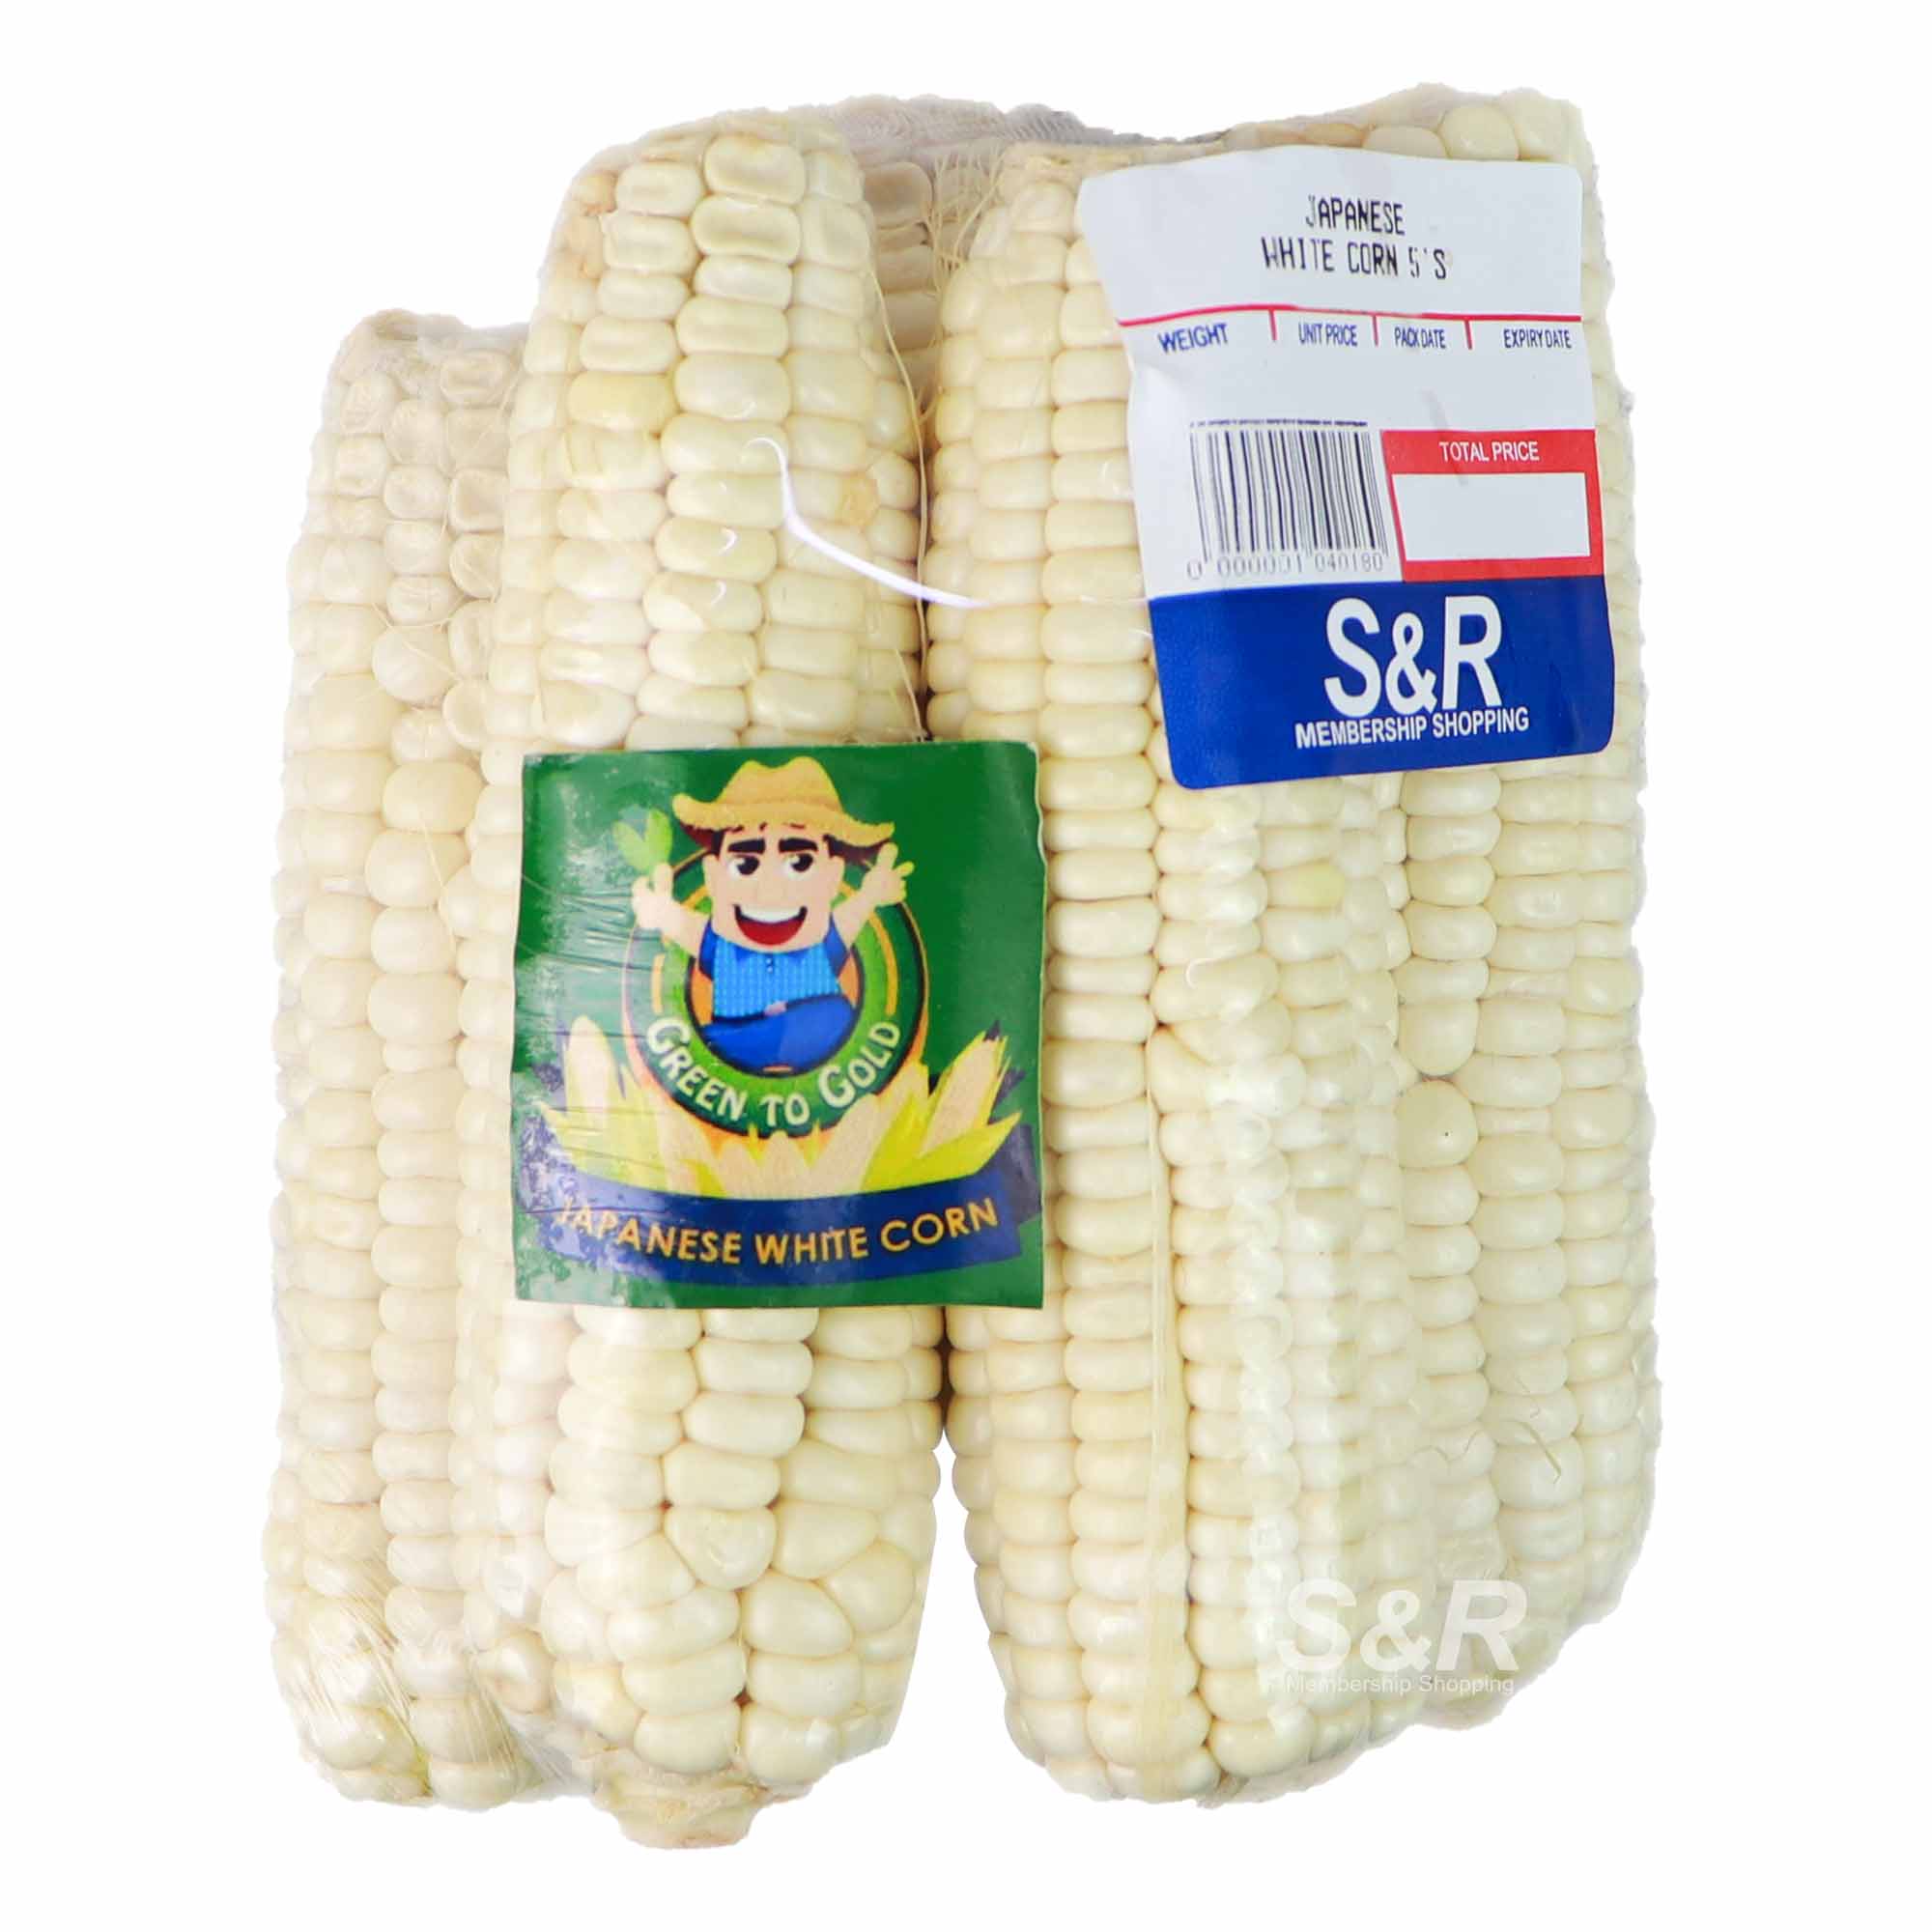 S&R Japanese White Corn 5pcs